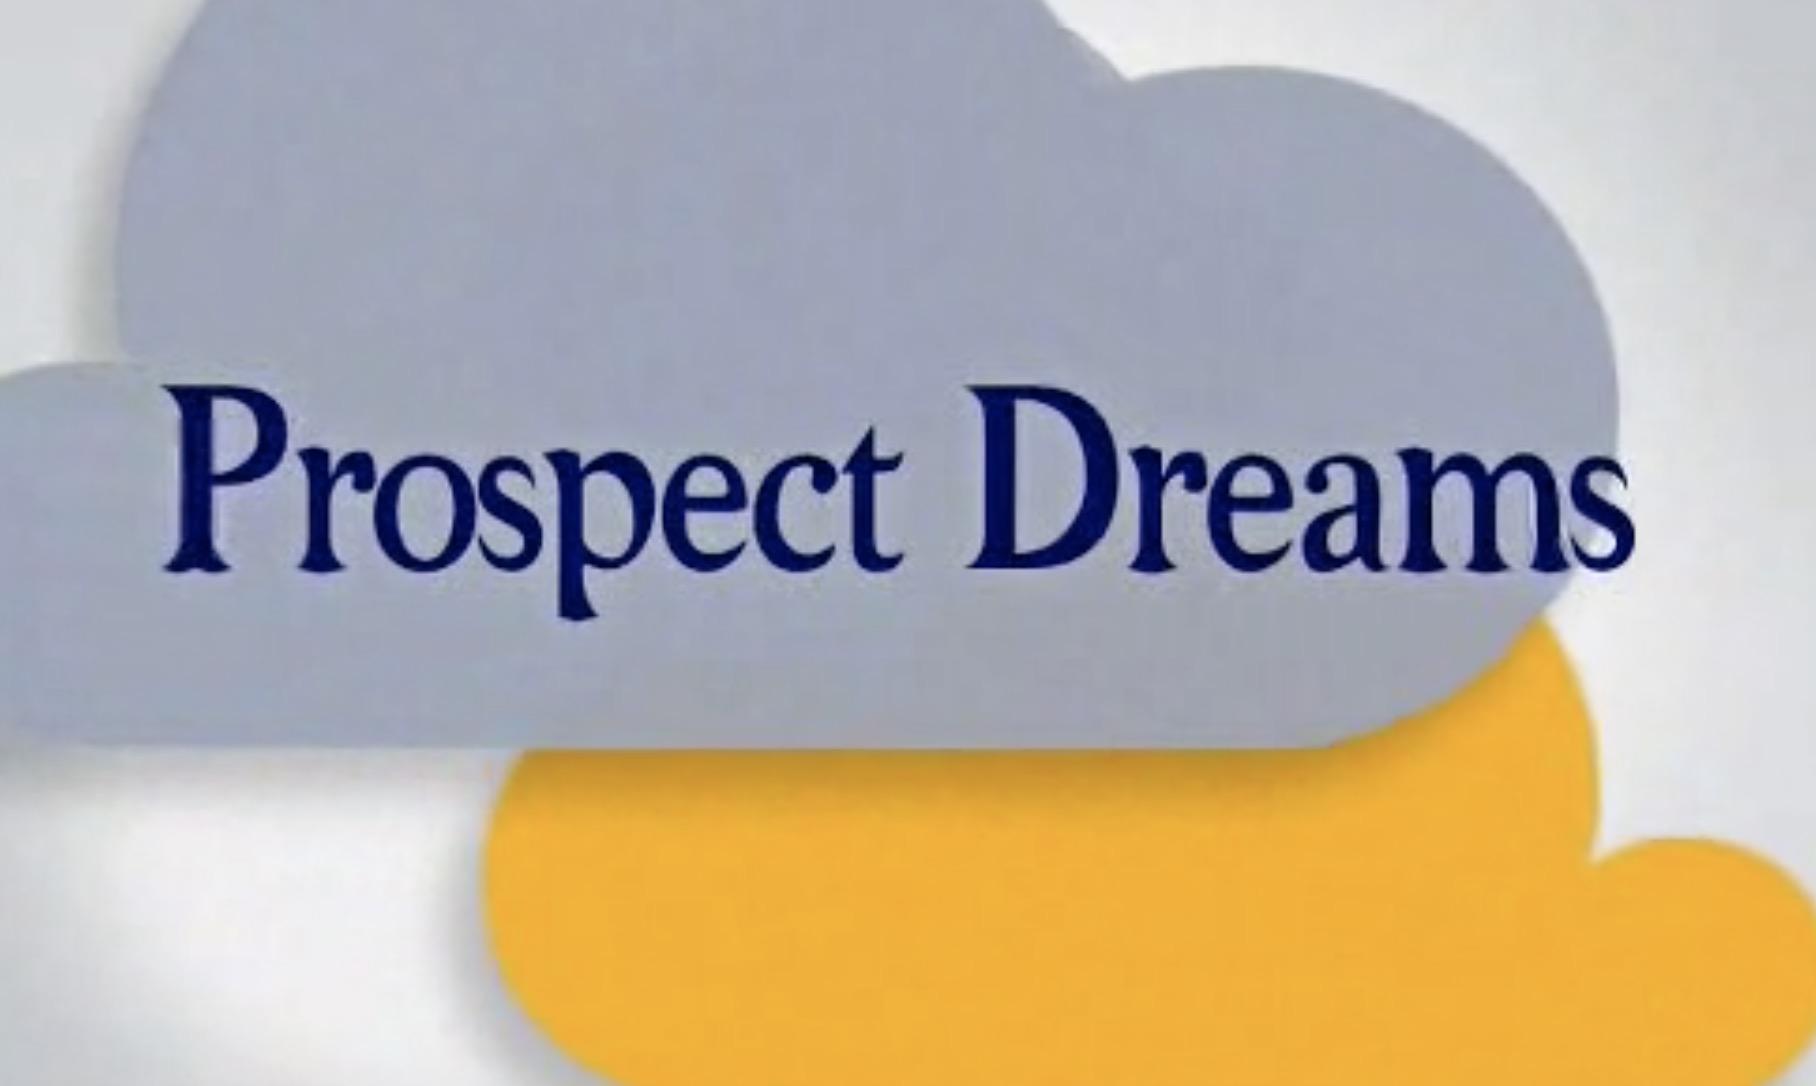 Prospect Dreams